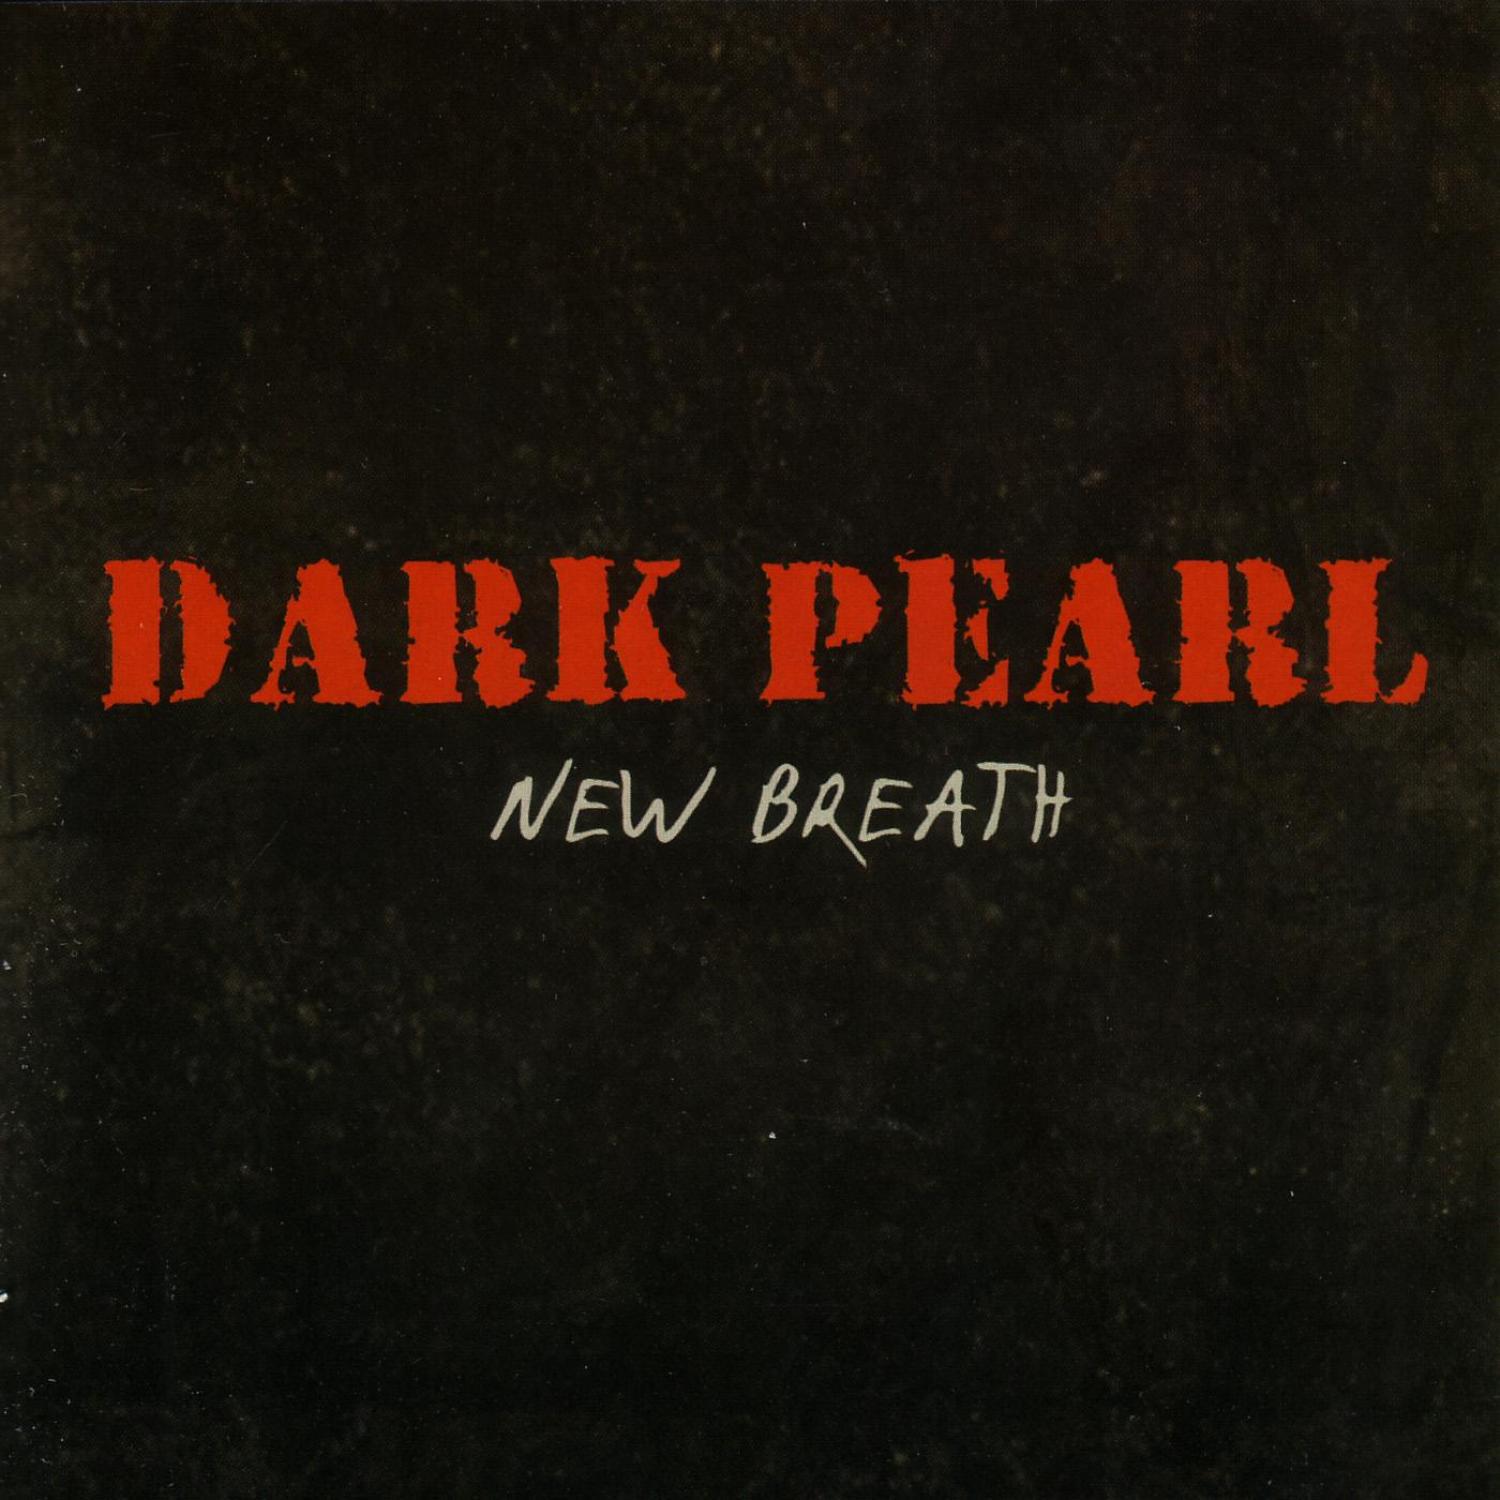 Dark Pearl - Stand Alone Together